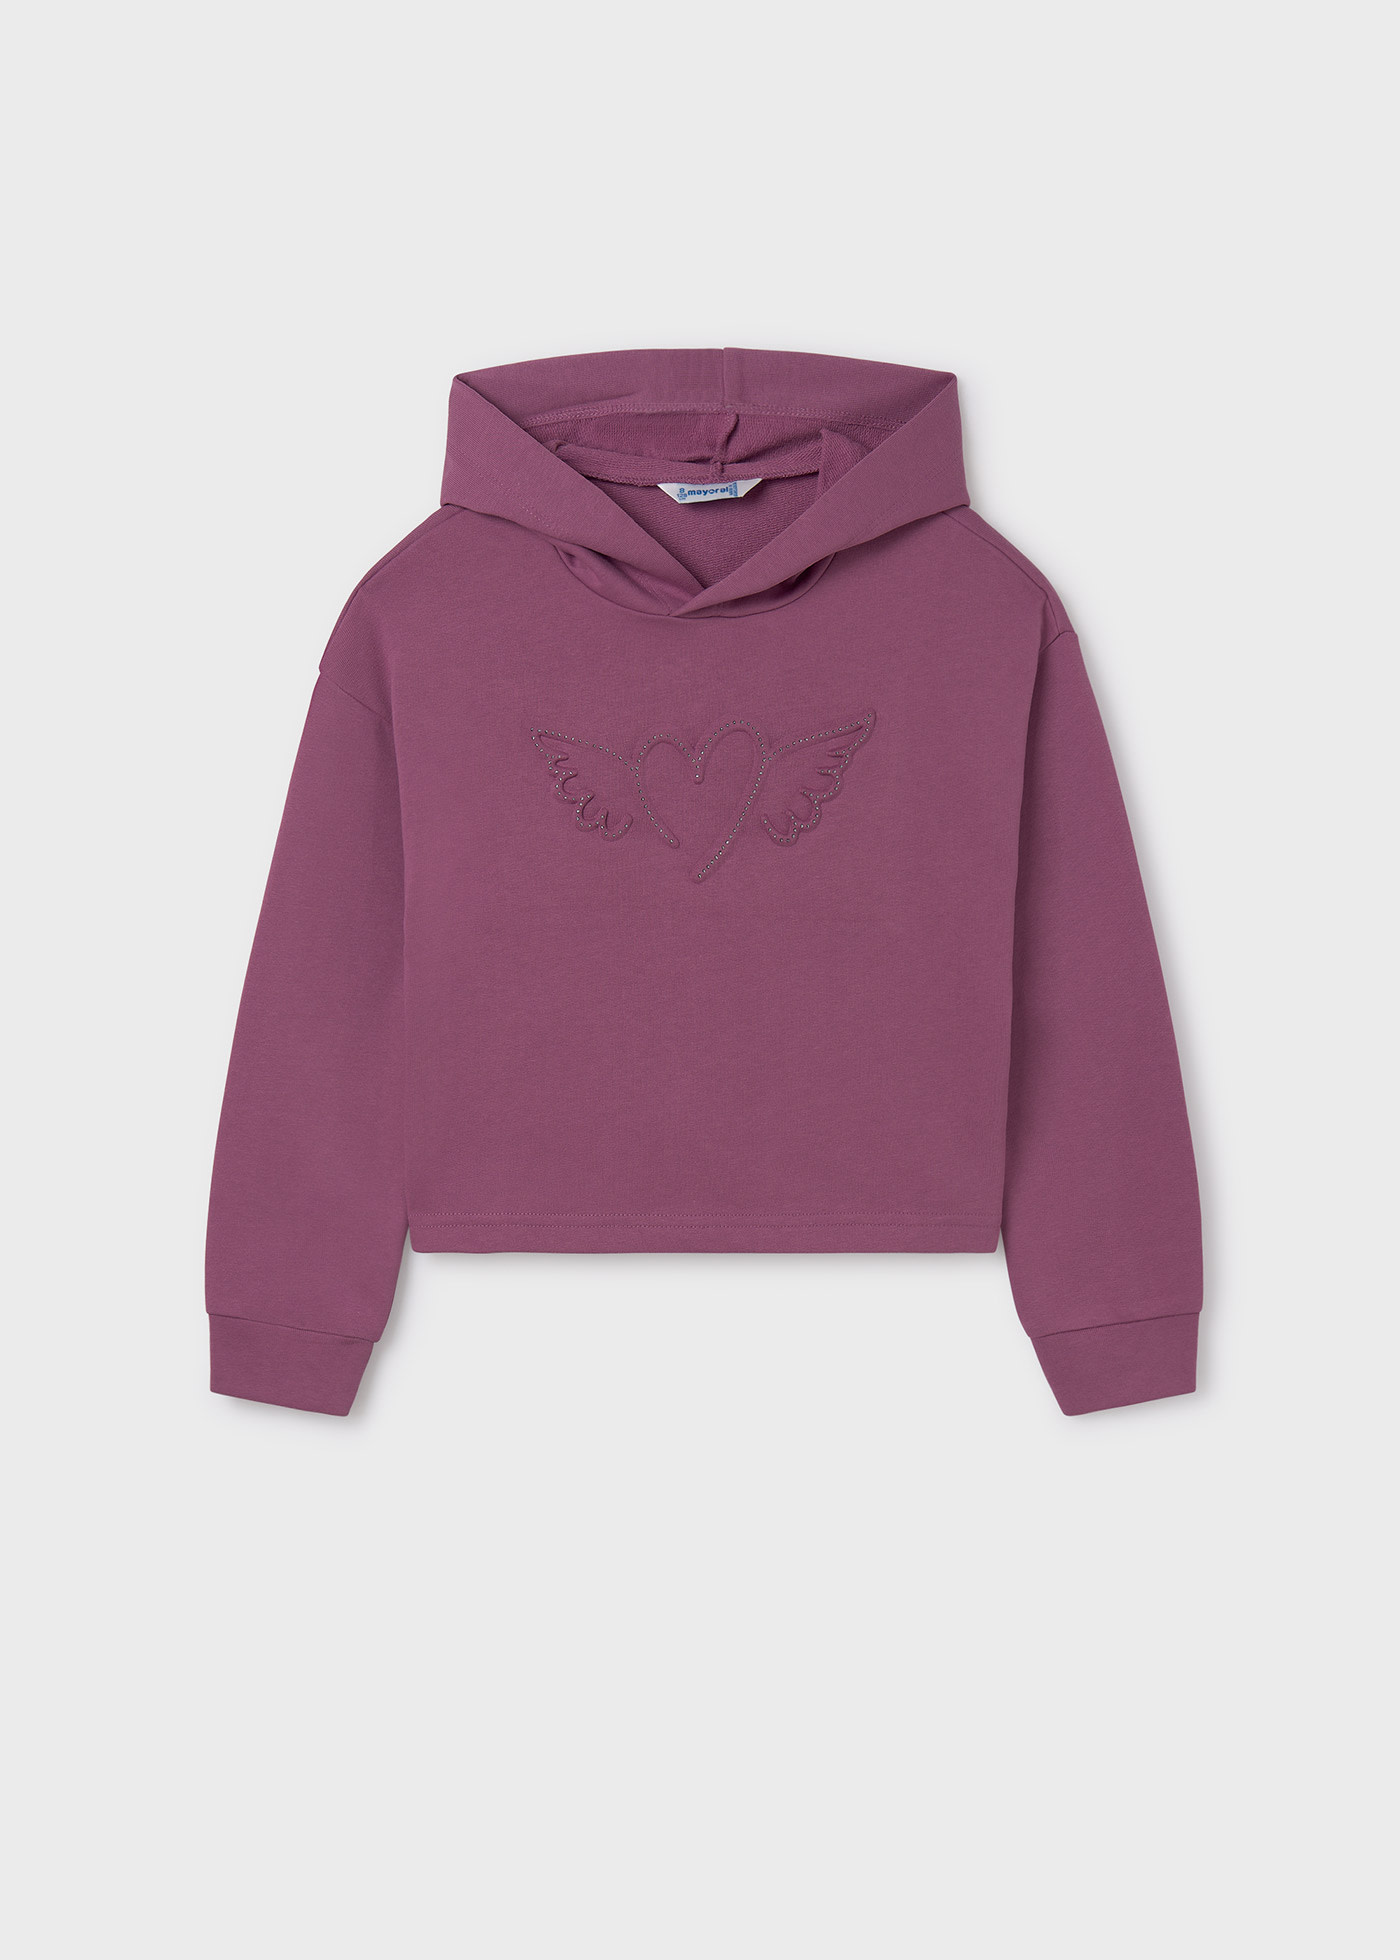 Sweatshirt heart print for girls